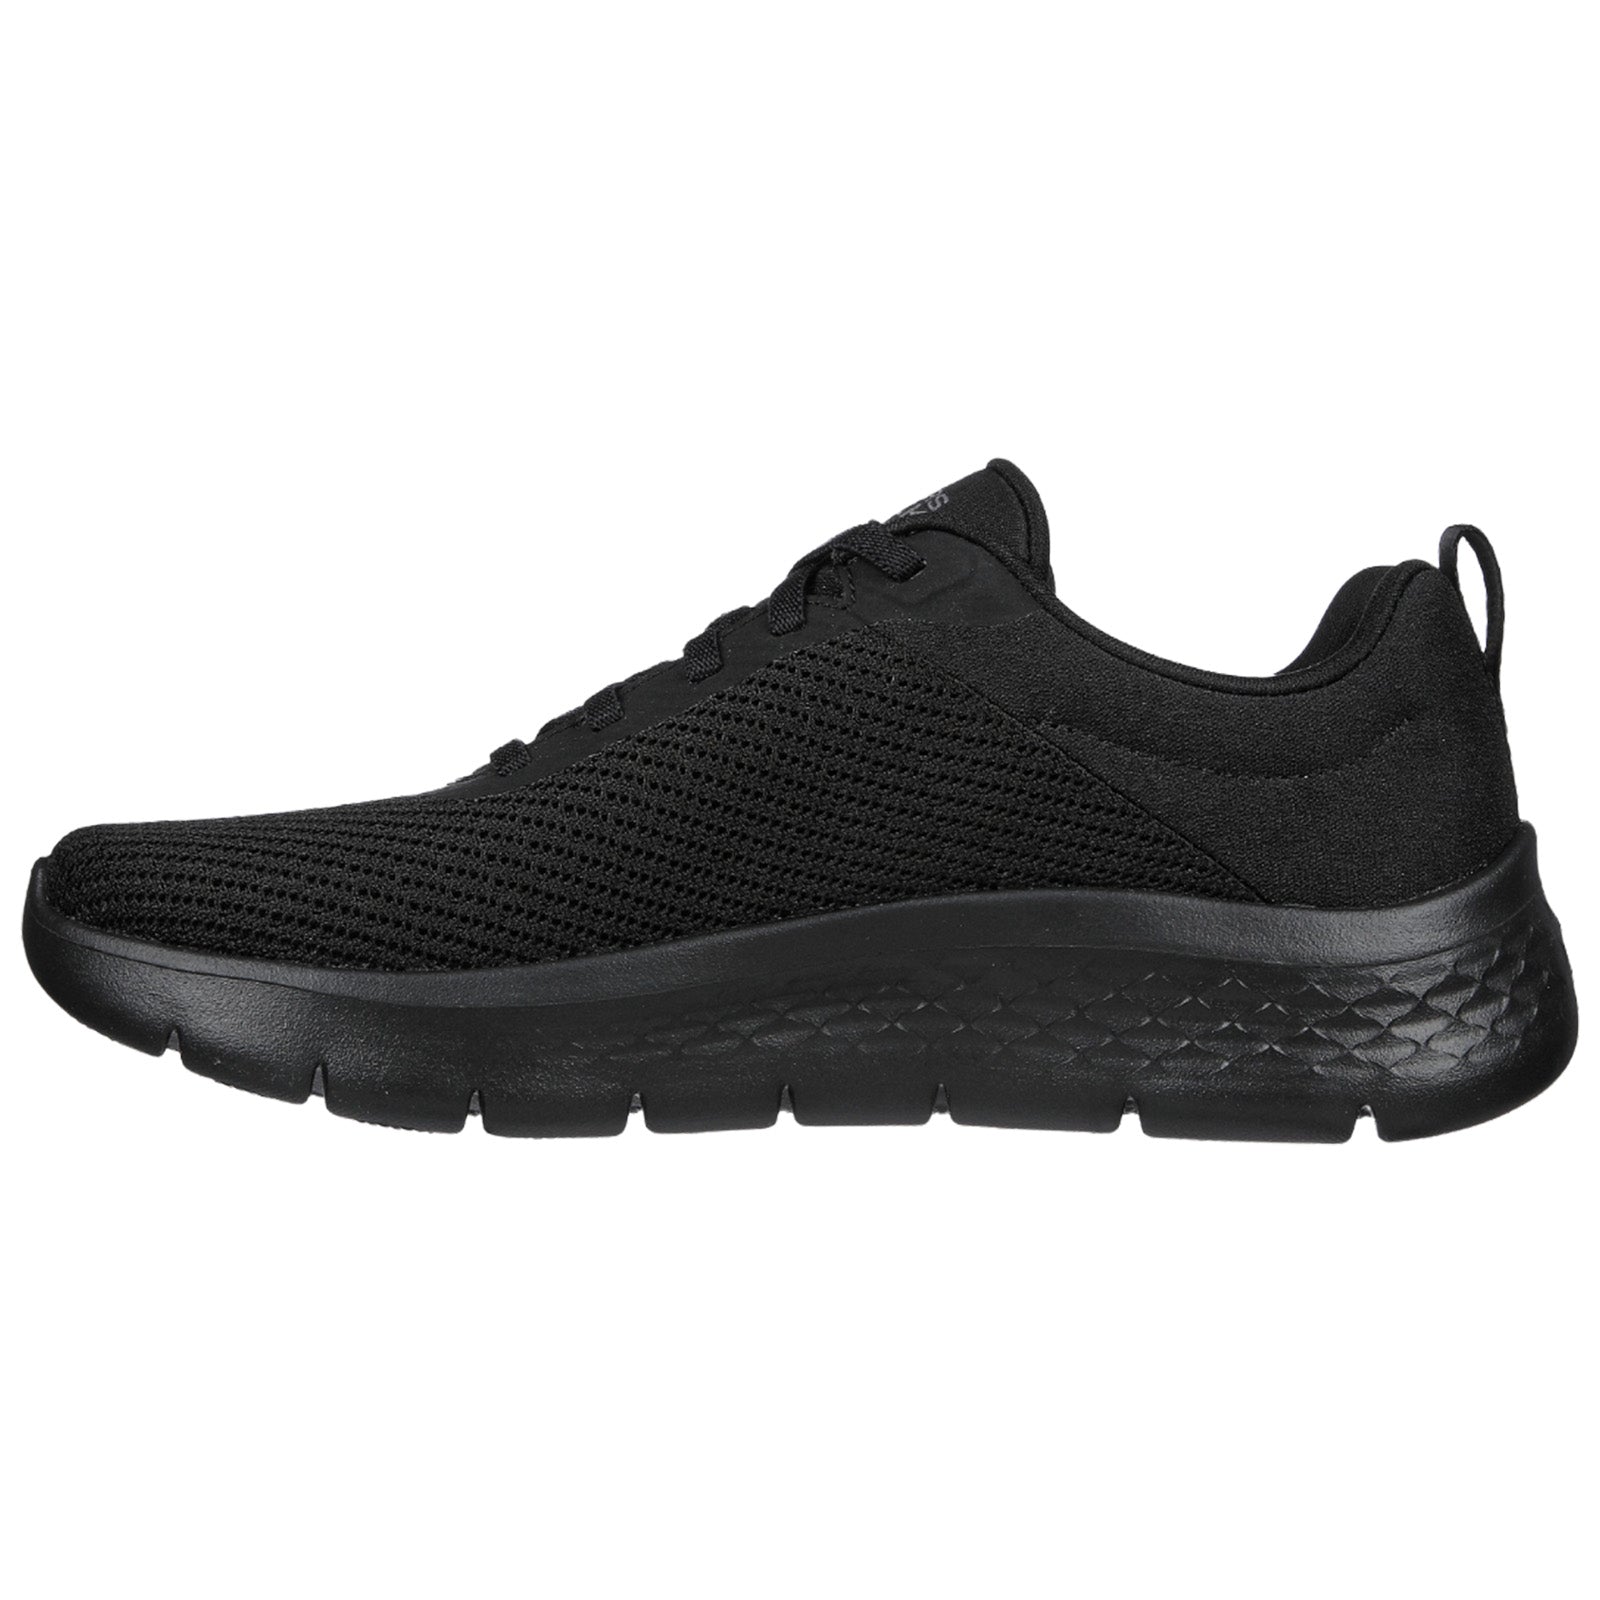 Buy SKECHERS GO FLEX 2 - COMPLETION Black GoWalk Walking shoes (UK